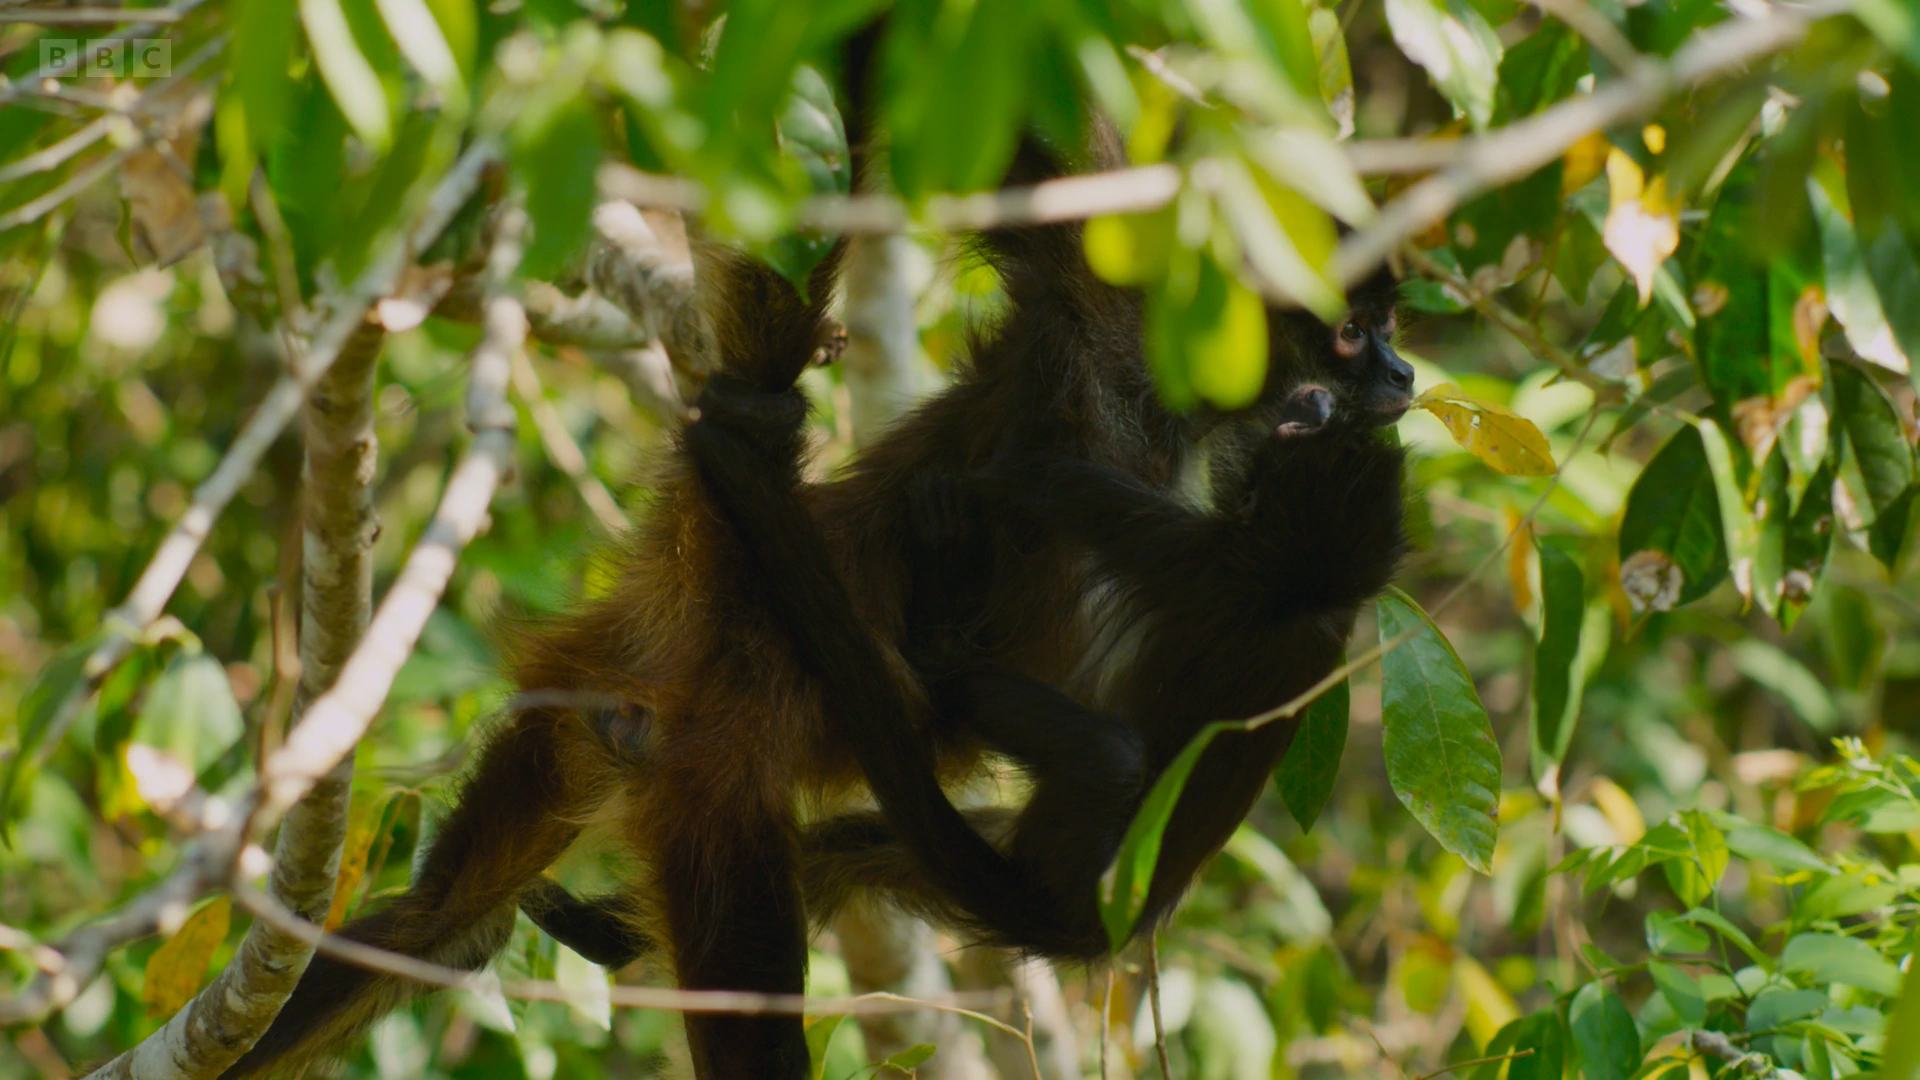 Yucatan spider monkey (Ateles geoffroyi yucatanensis) as shown in Planet Earth II - Jungles